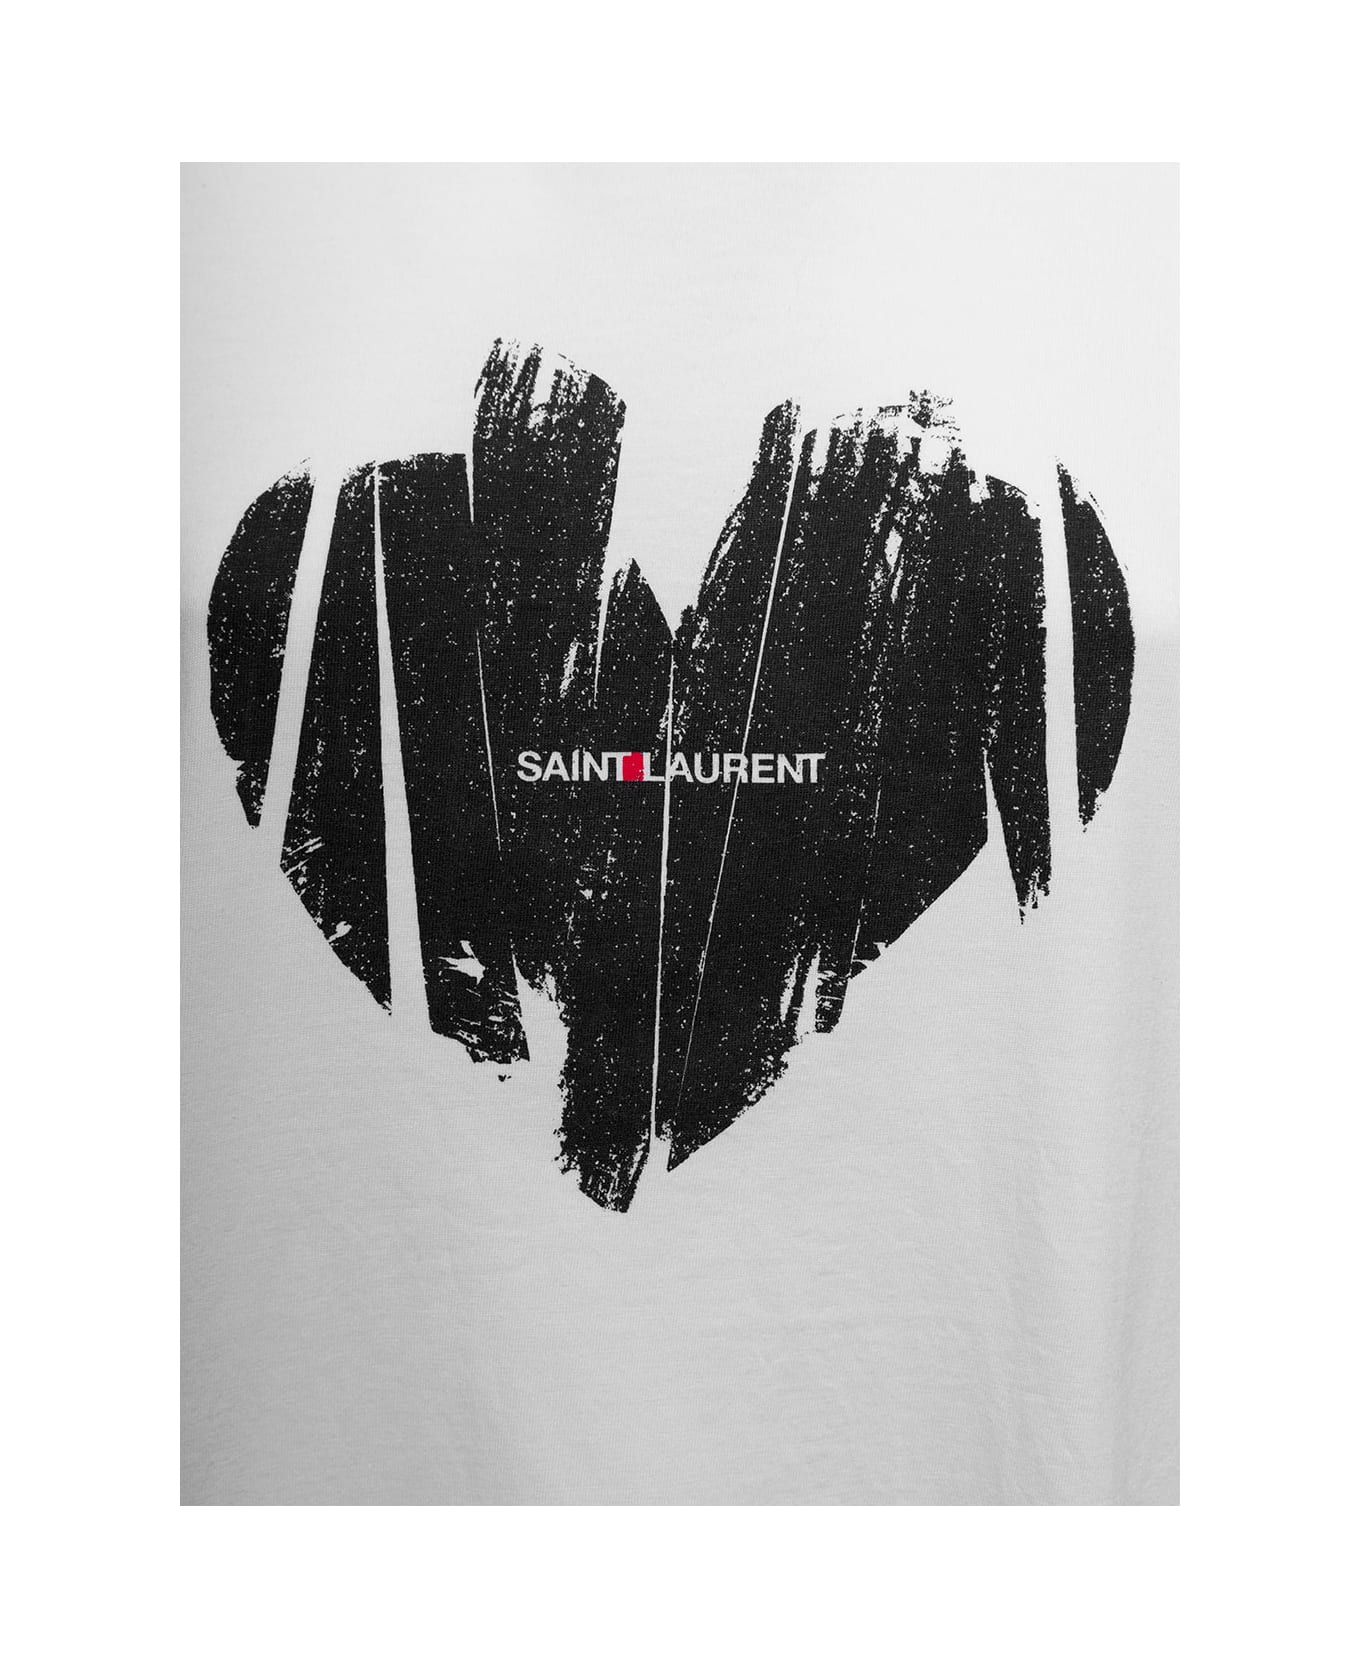 Saint Laurent Woman's White Cotton T-shirt With Heart Print - White